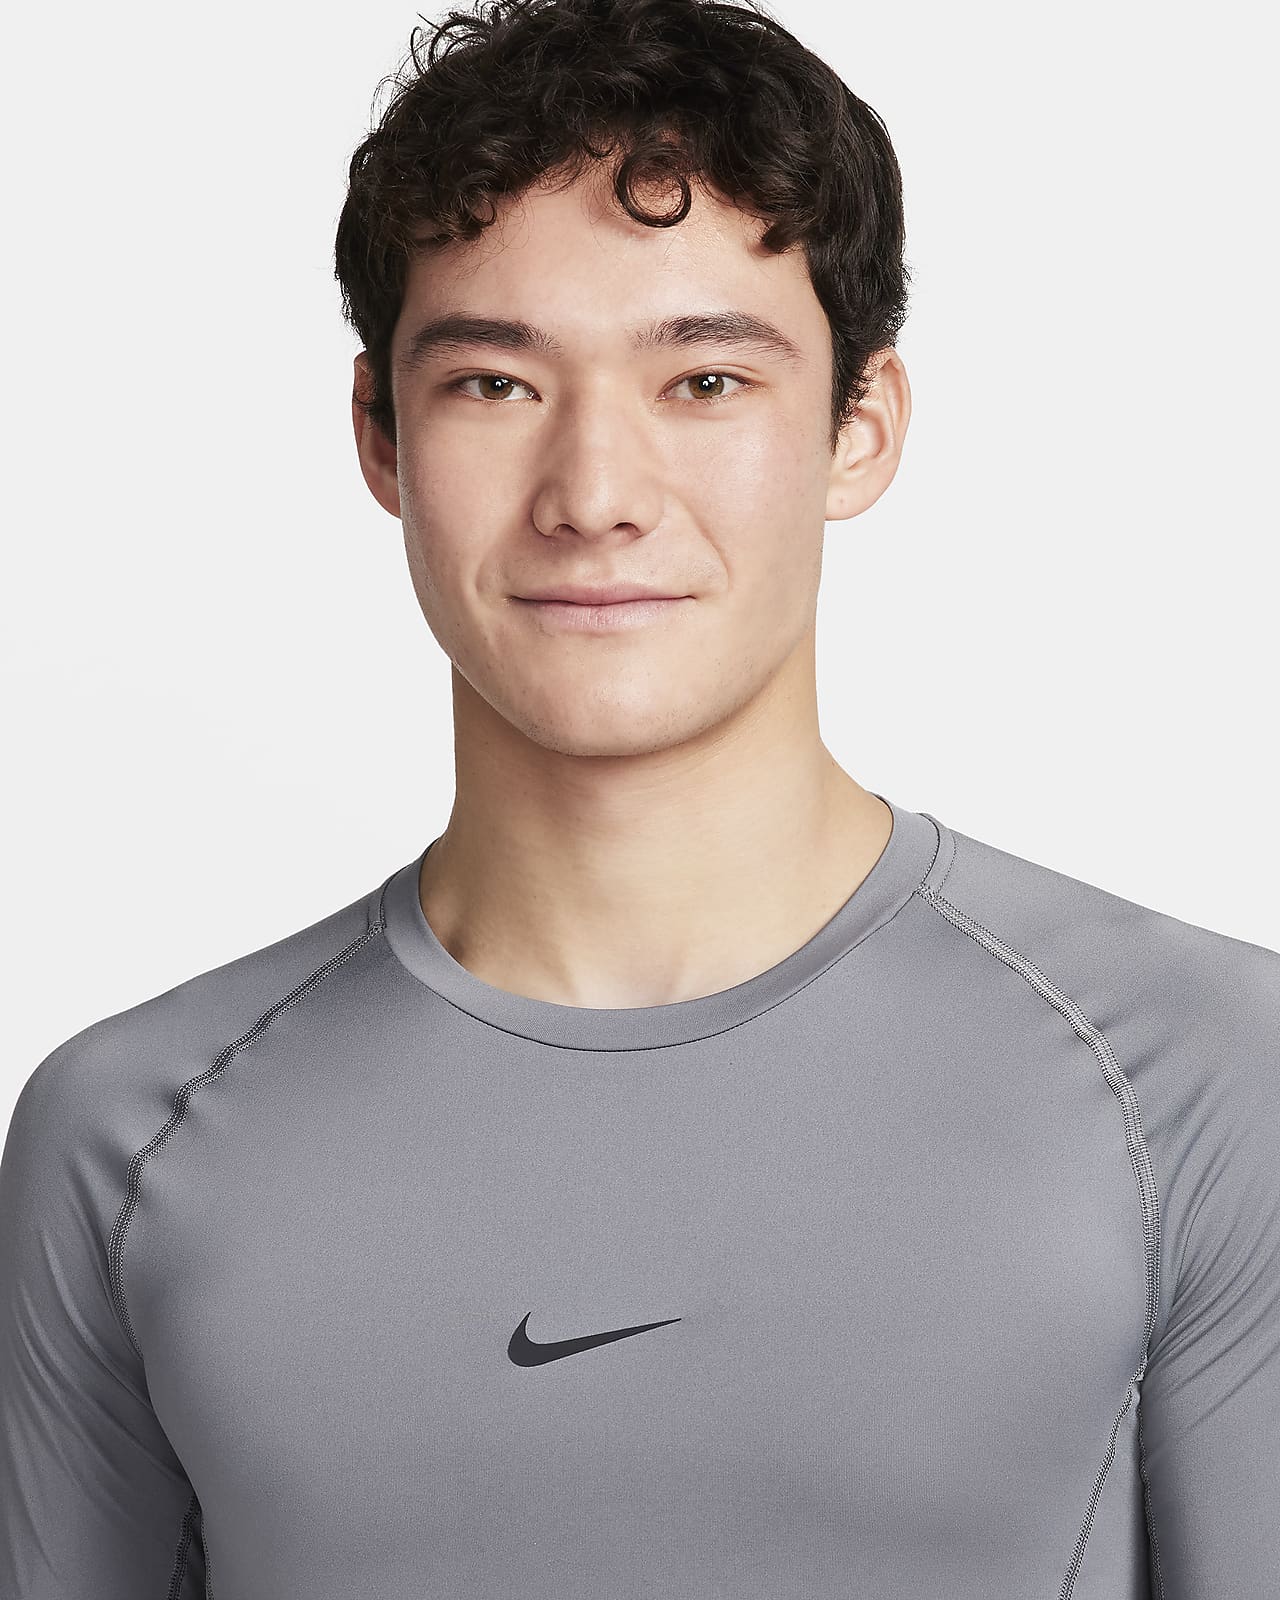 Nike Dri-FIT UV Hyverse Men's Long-Sleeve Fitness Top